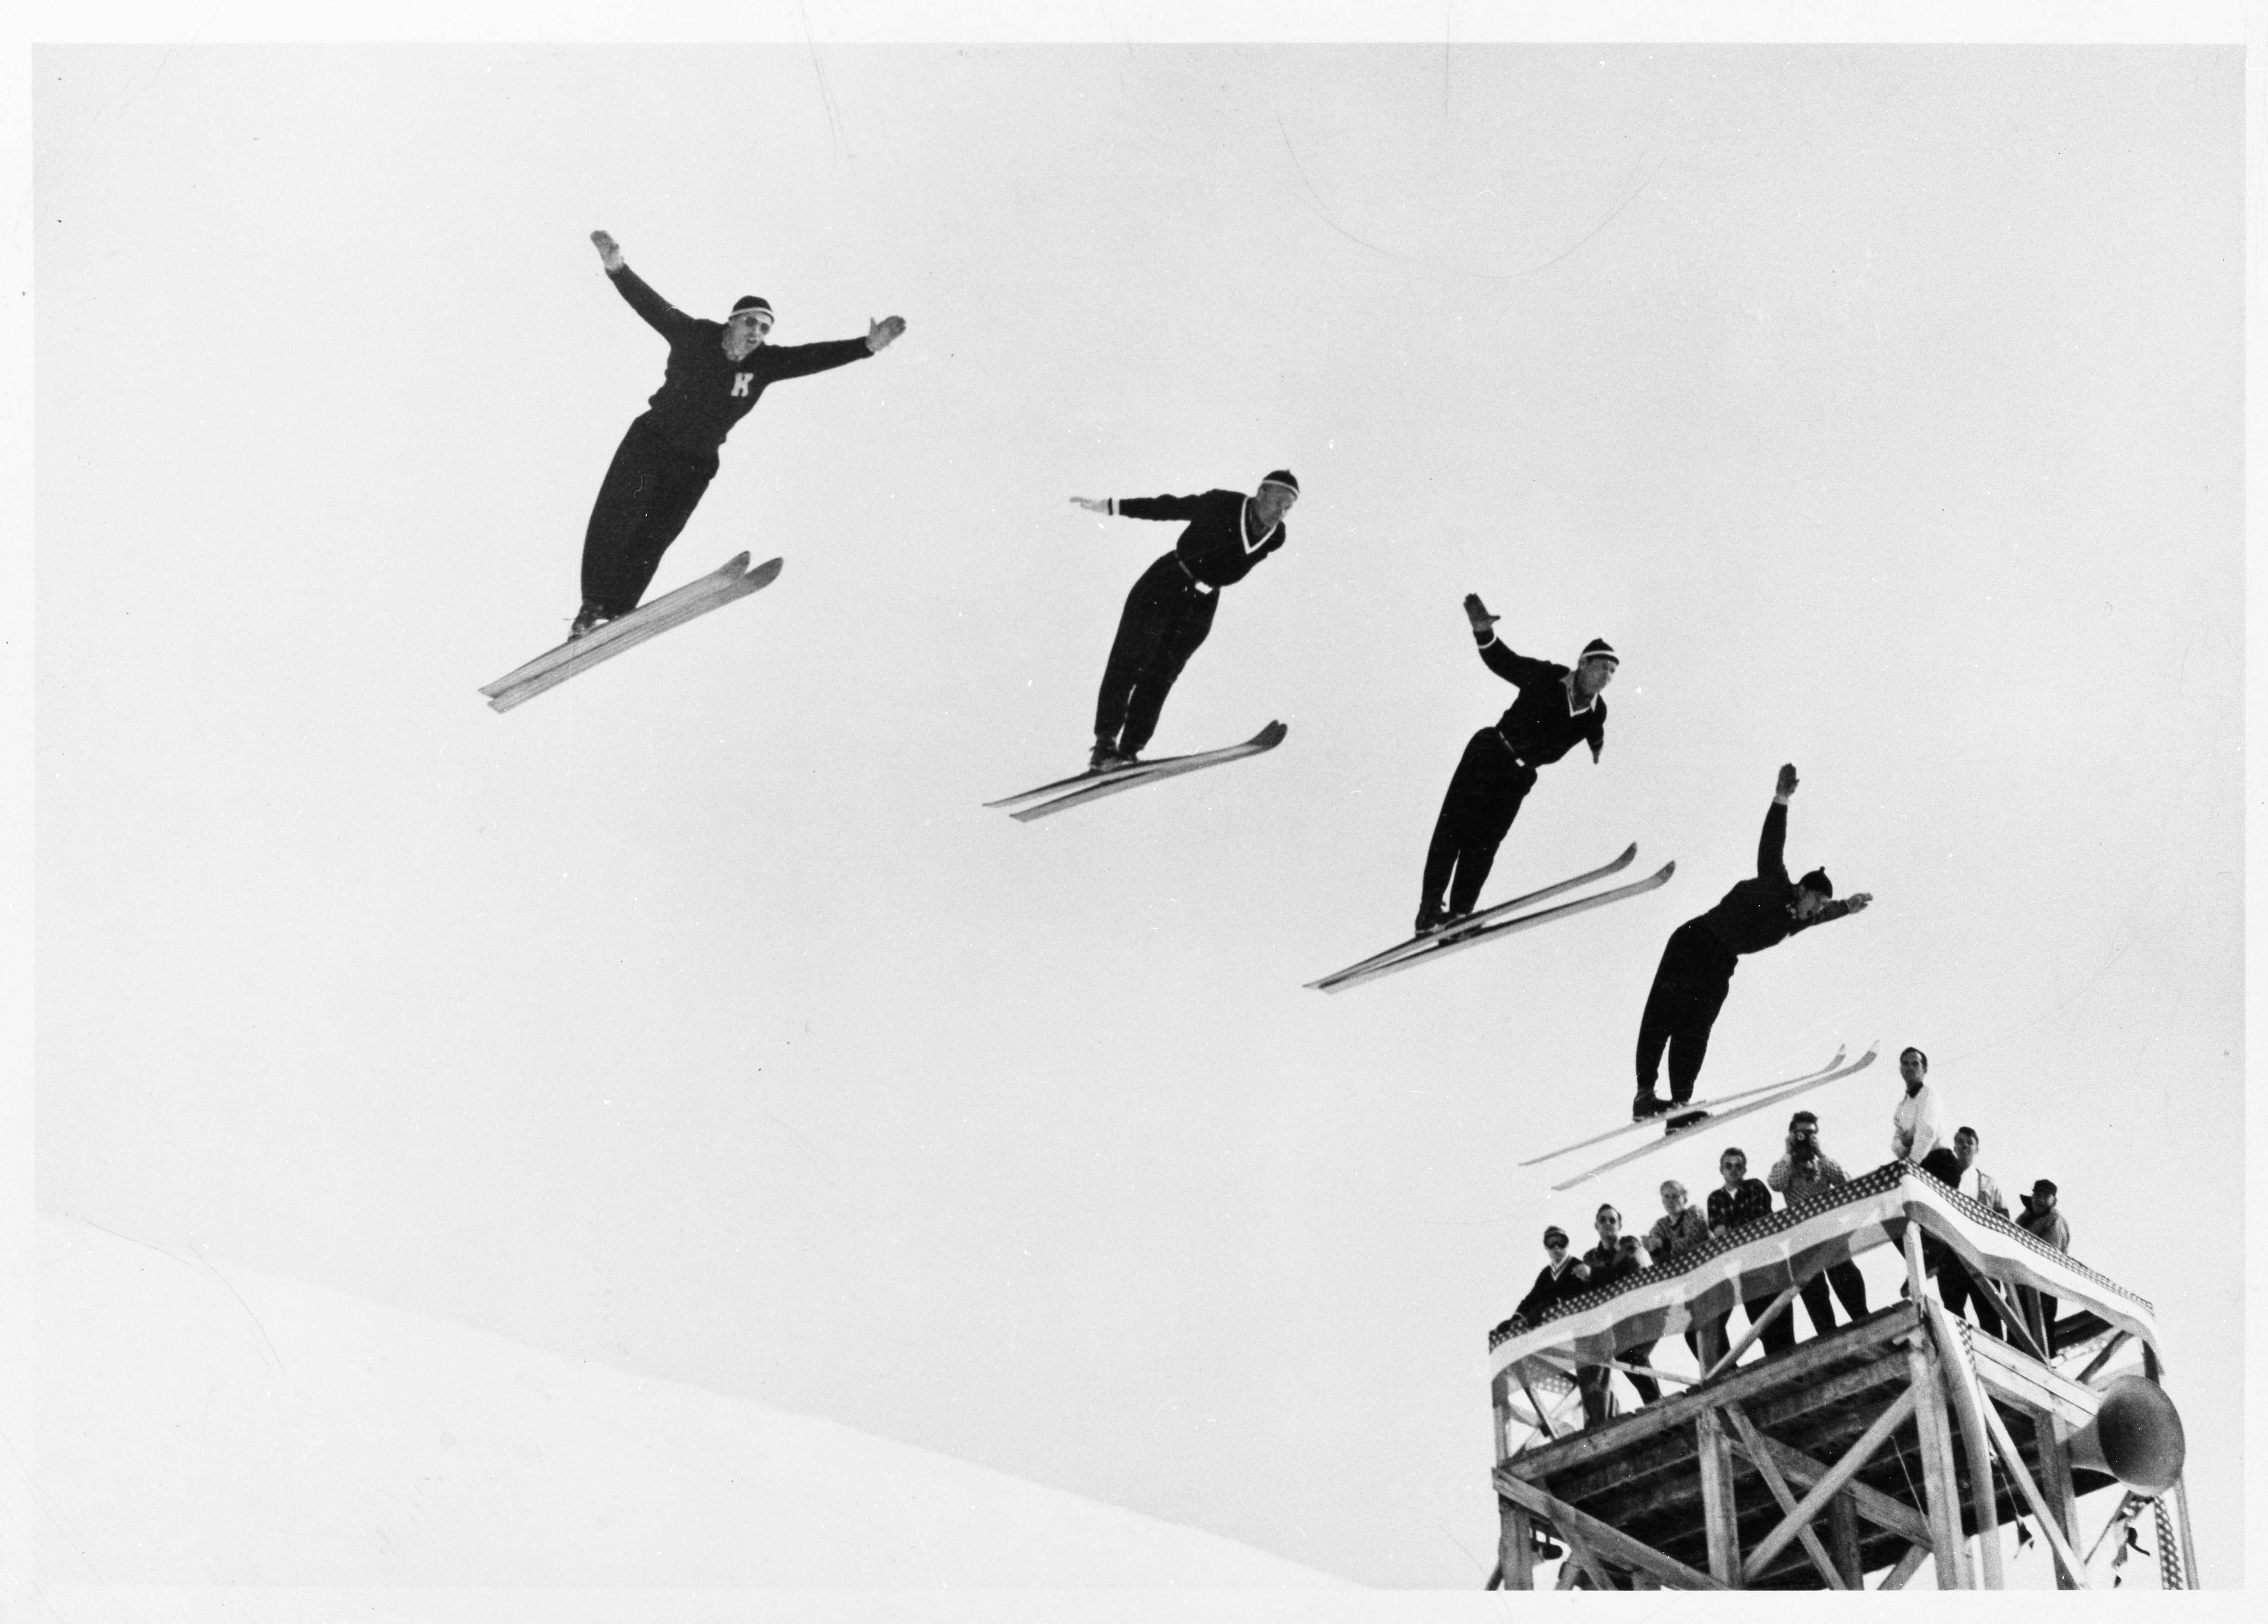 Olav Ulland, Gustav Raaum, Alf Engen, and Kjell Stordalen perform a four-person simultaneous ski jump at Sun Valley, Idaho, in December 1948. Courtesy of National Nordic Museum